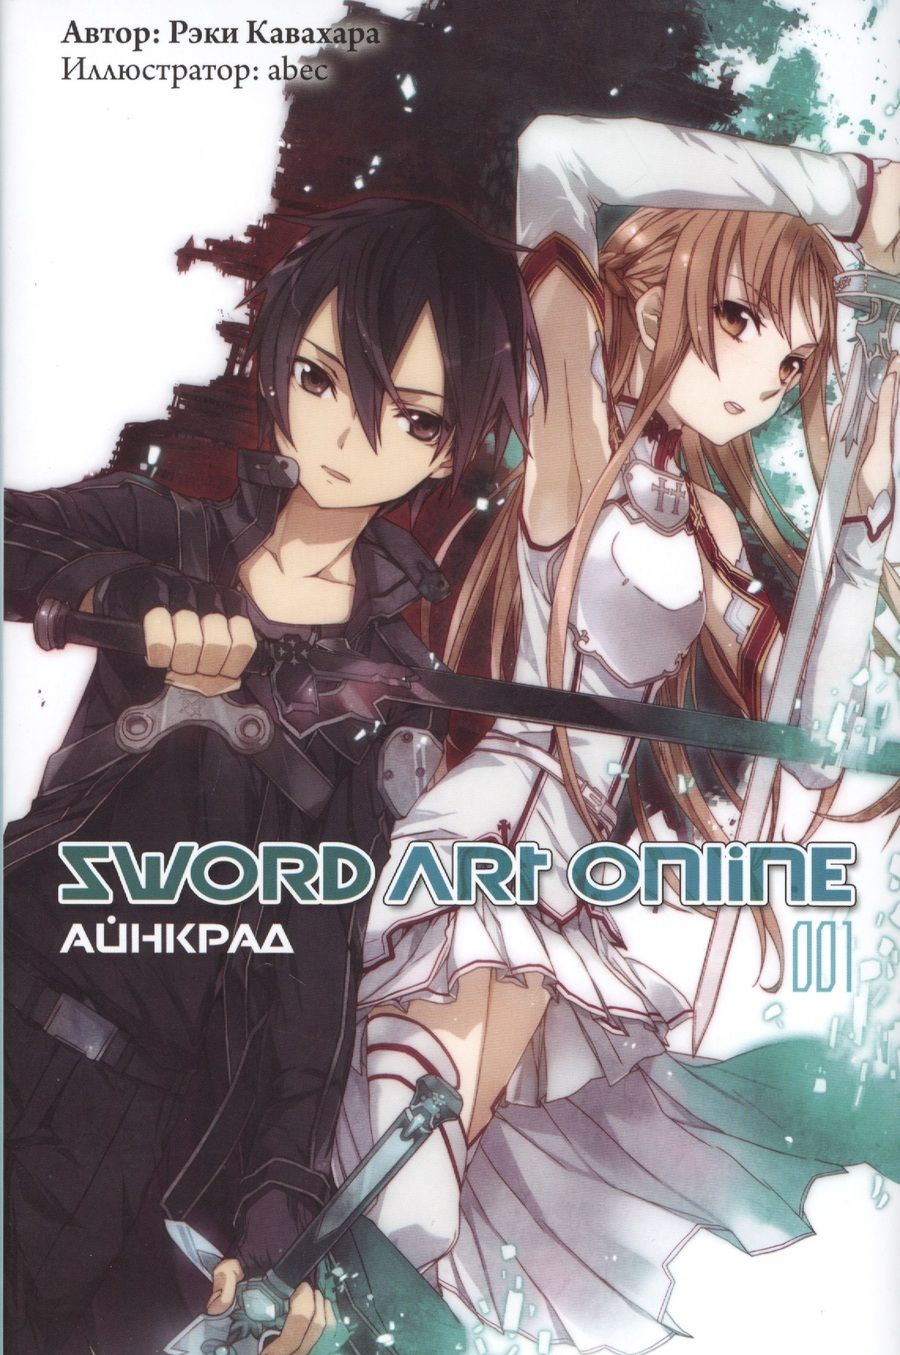 Обложка книги "Кавахара: Sword Art Online. Том 1. Айнкрад"